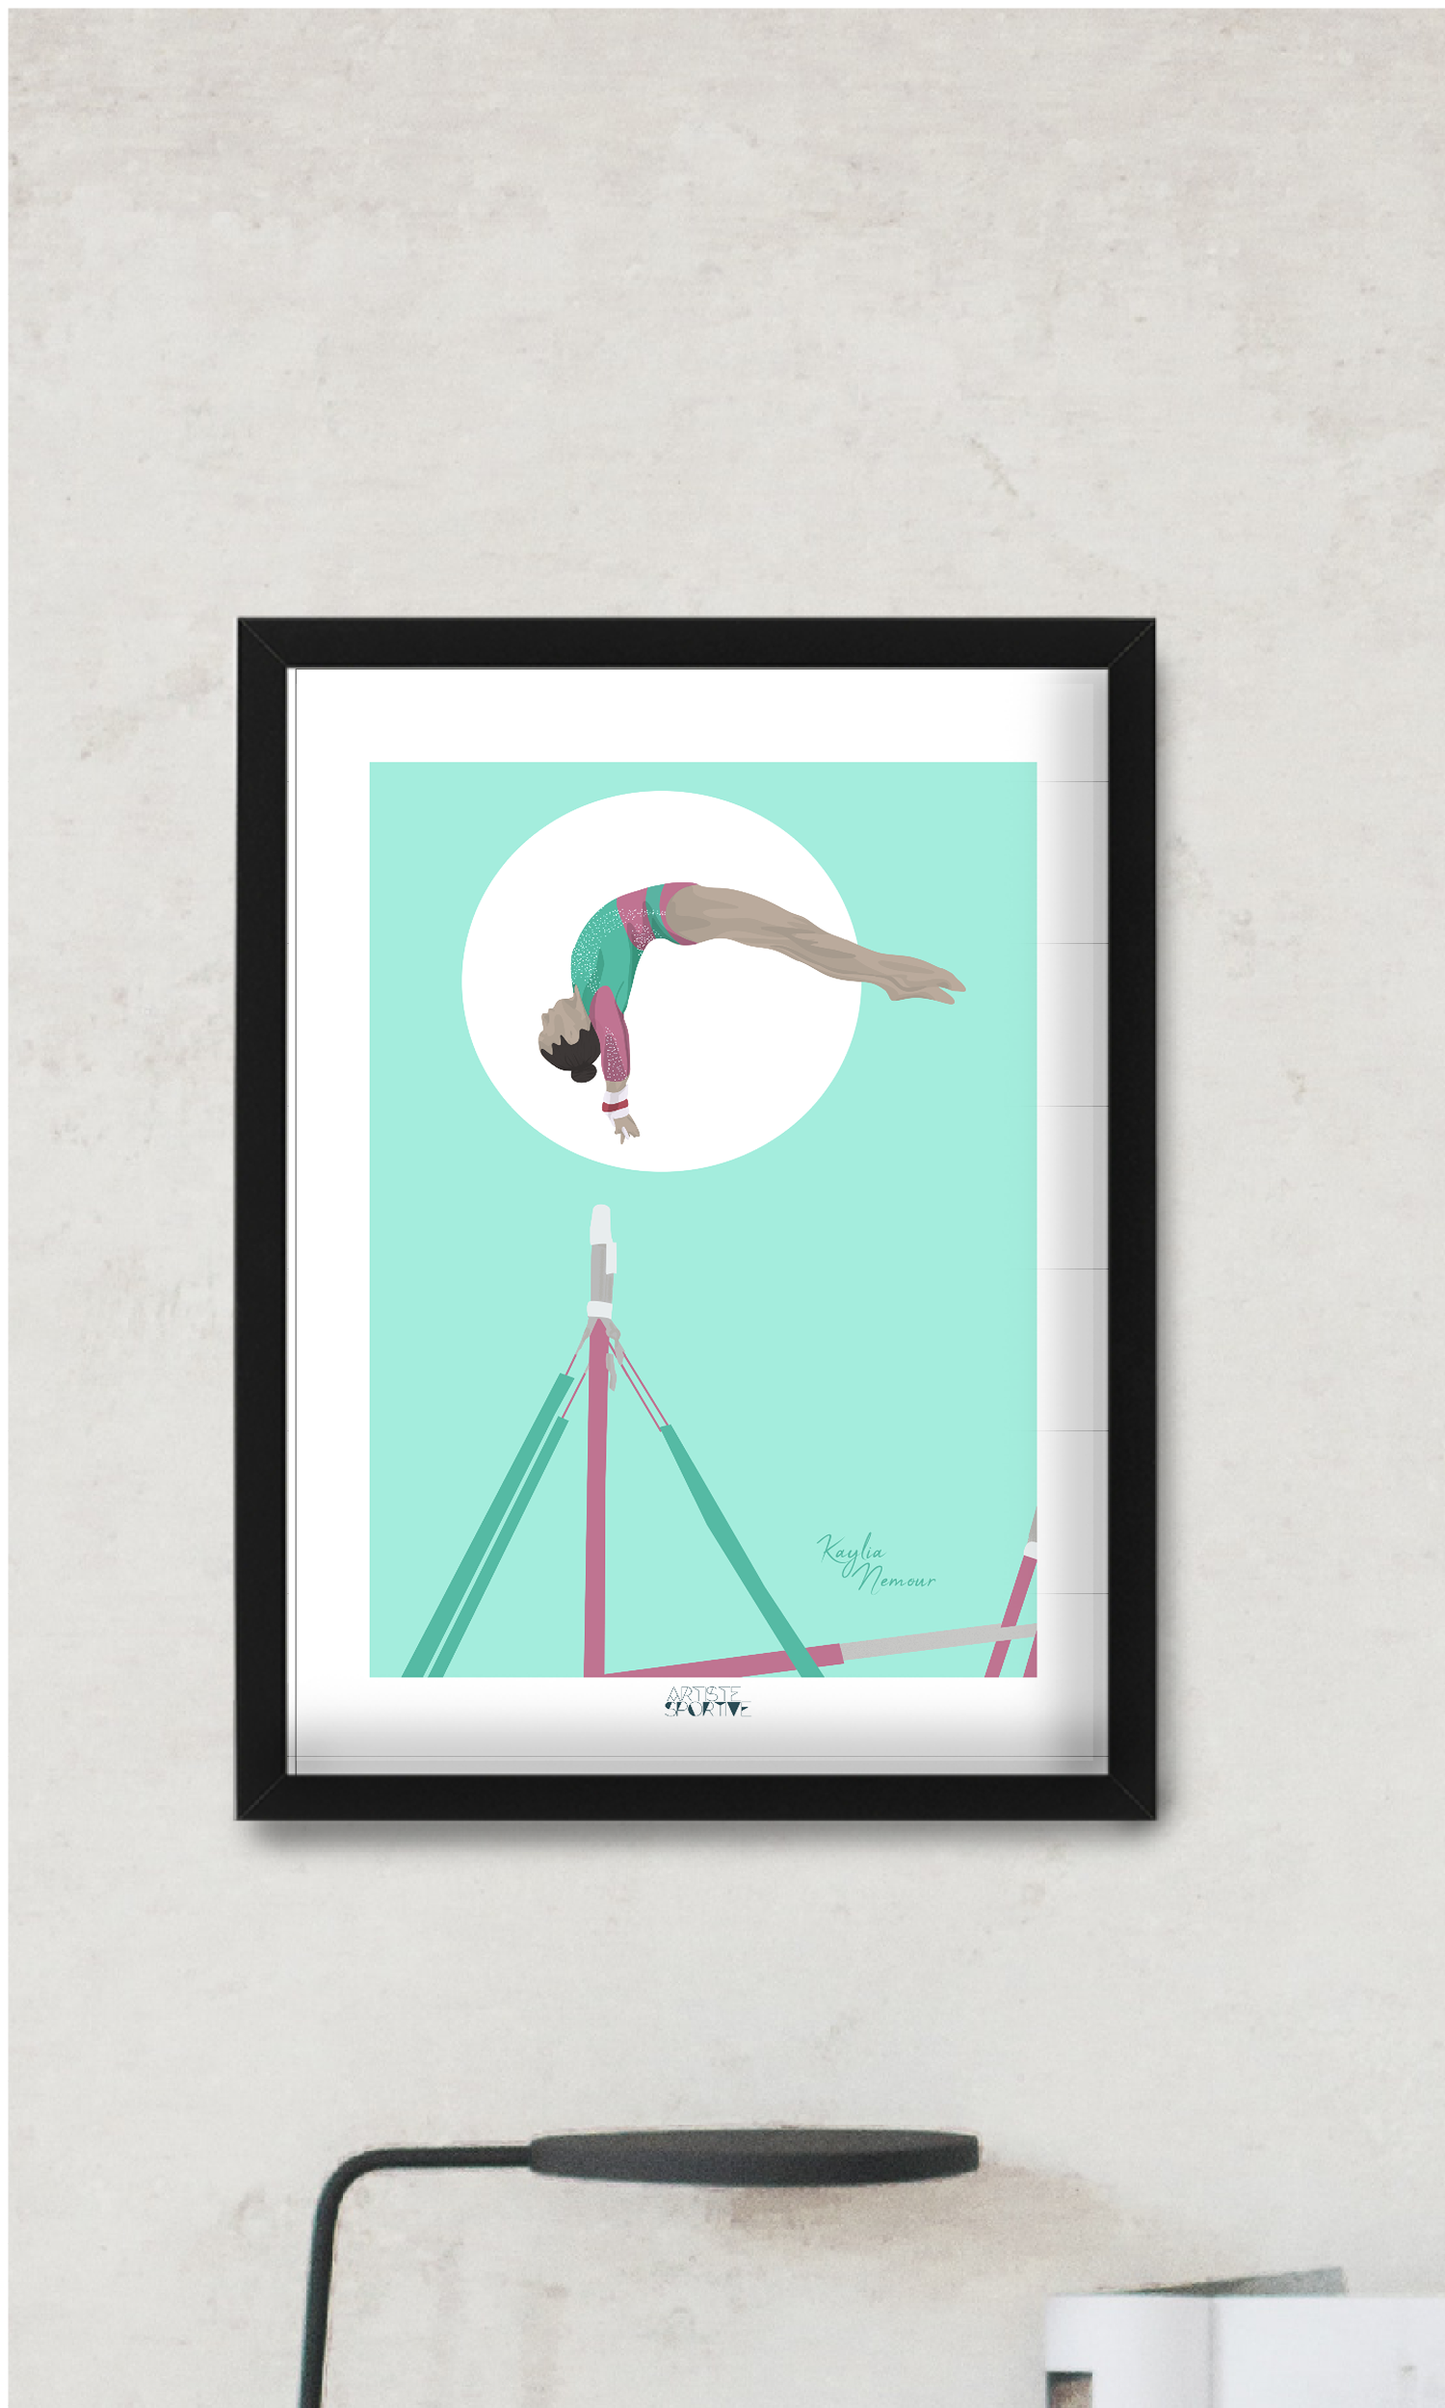 Gymnastics Poster “Bars”